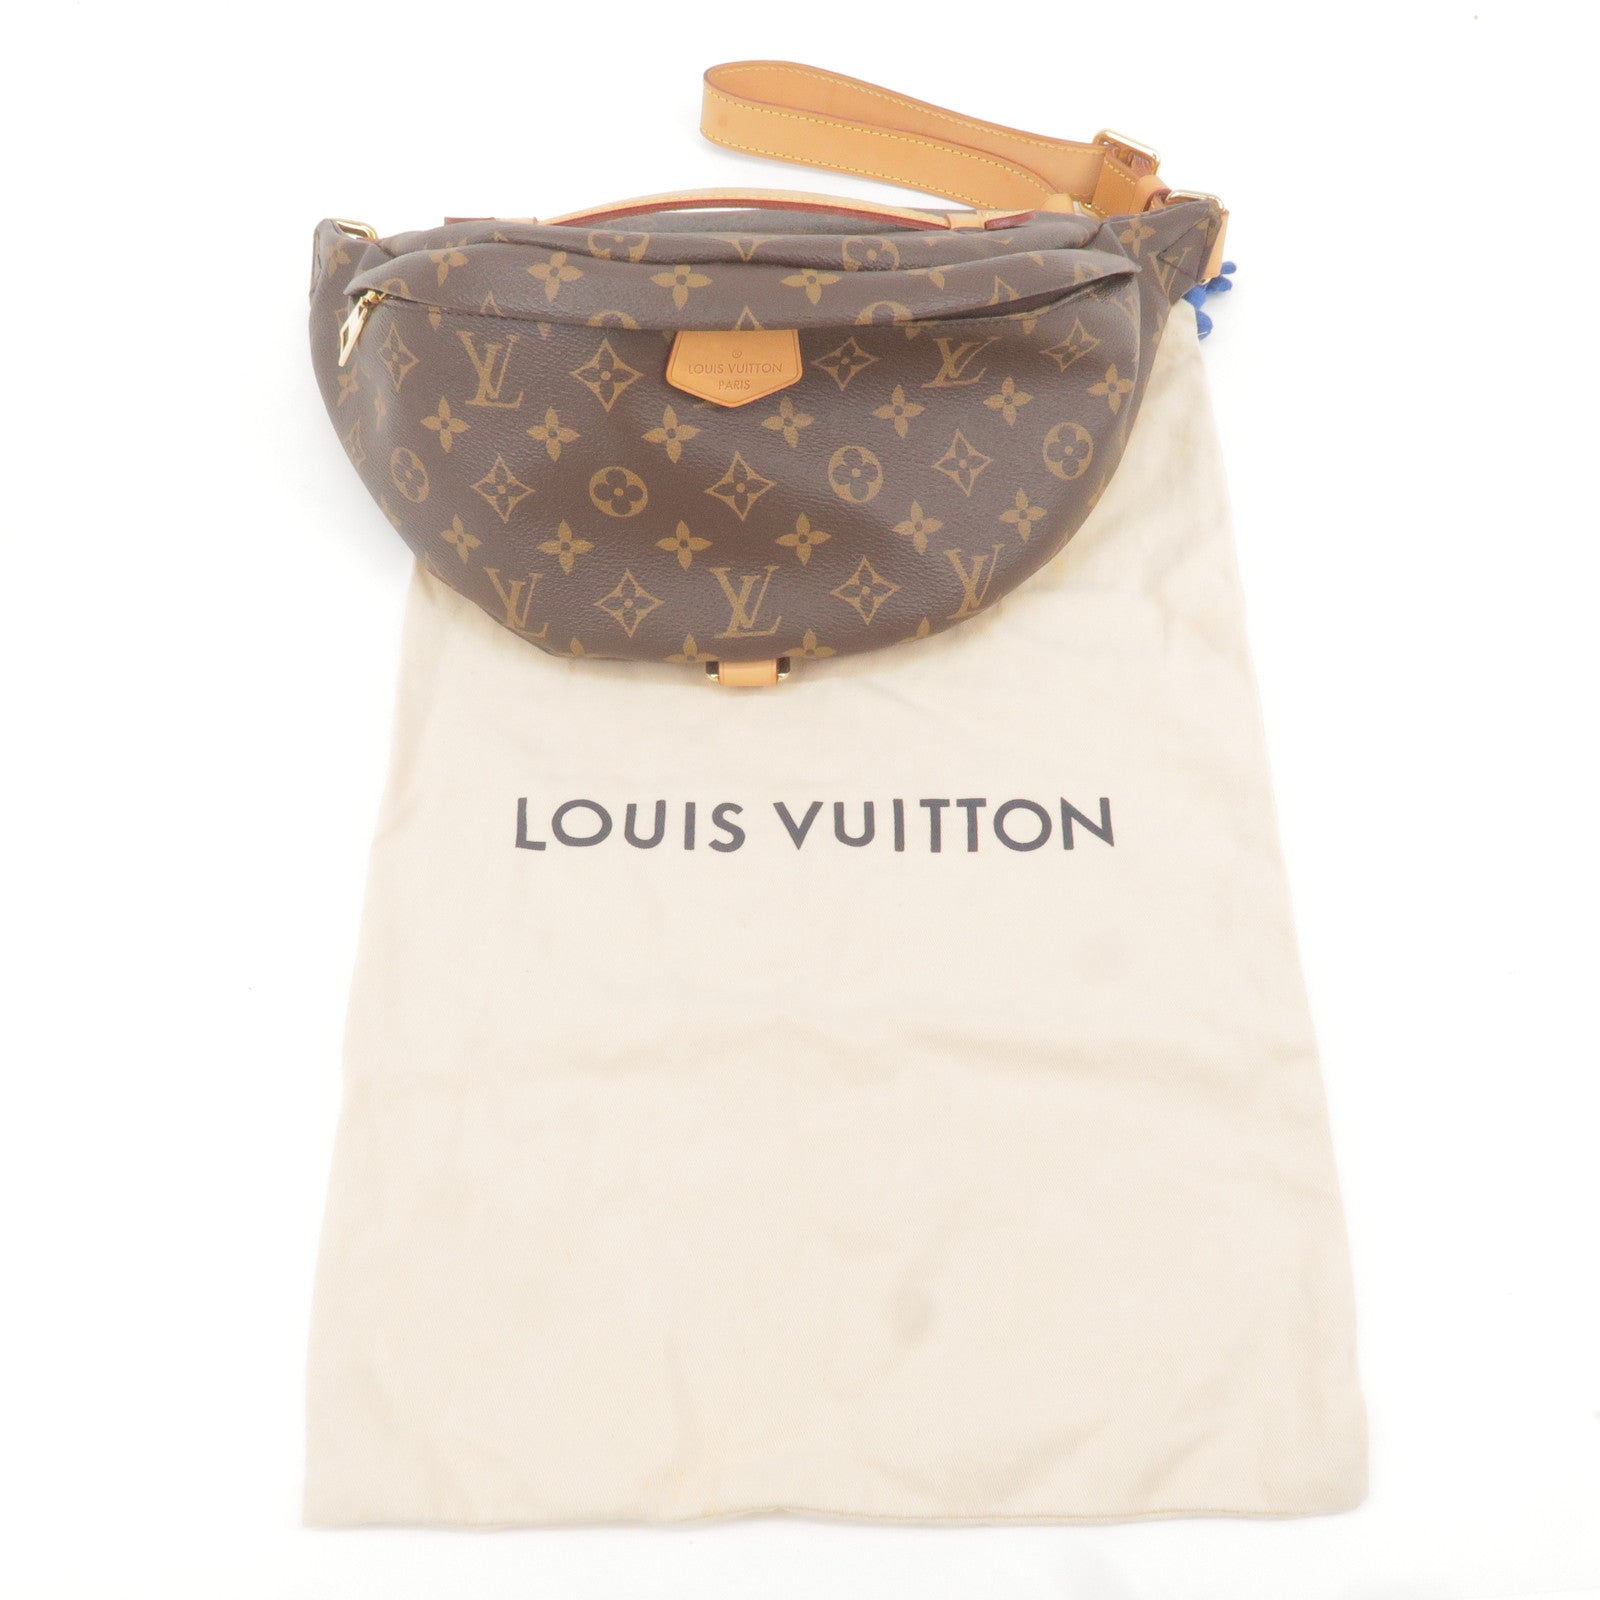 M43644 – dct - ep_vintage luxury Store - Monogram - Cross - Body - Vuitton  - Louis - Bag - Bolso de mano Louis Vuitton Neo Cabby en lona denim  Monogram gris y cuero gris - Bumbag